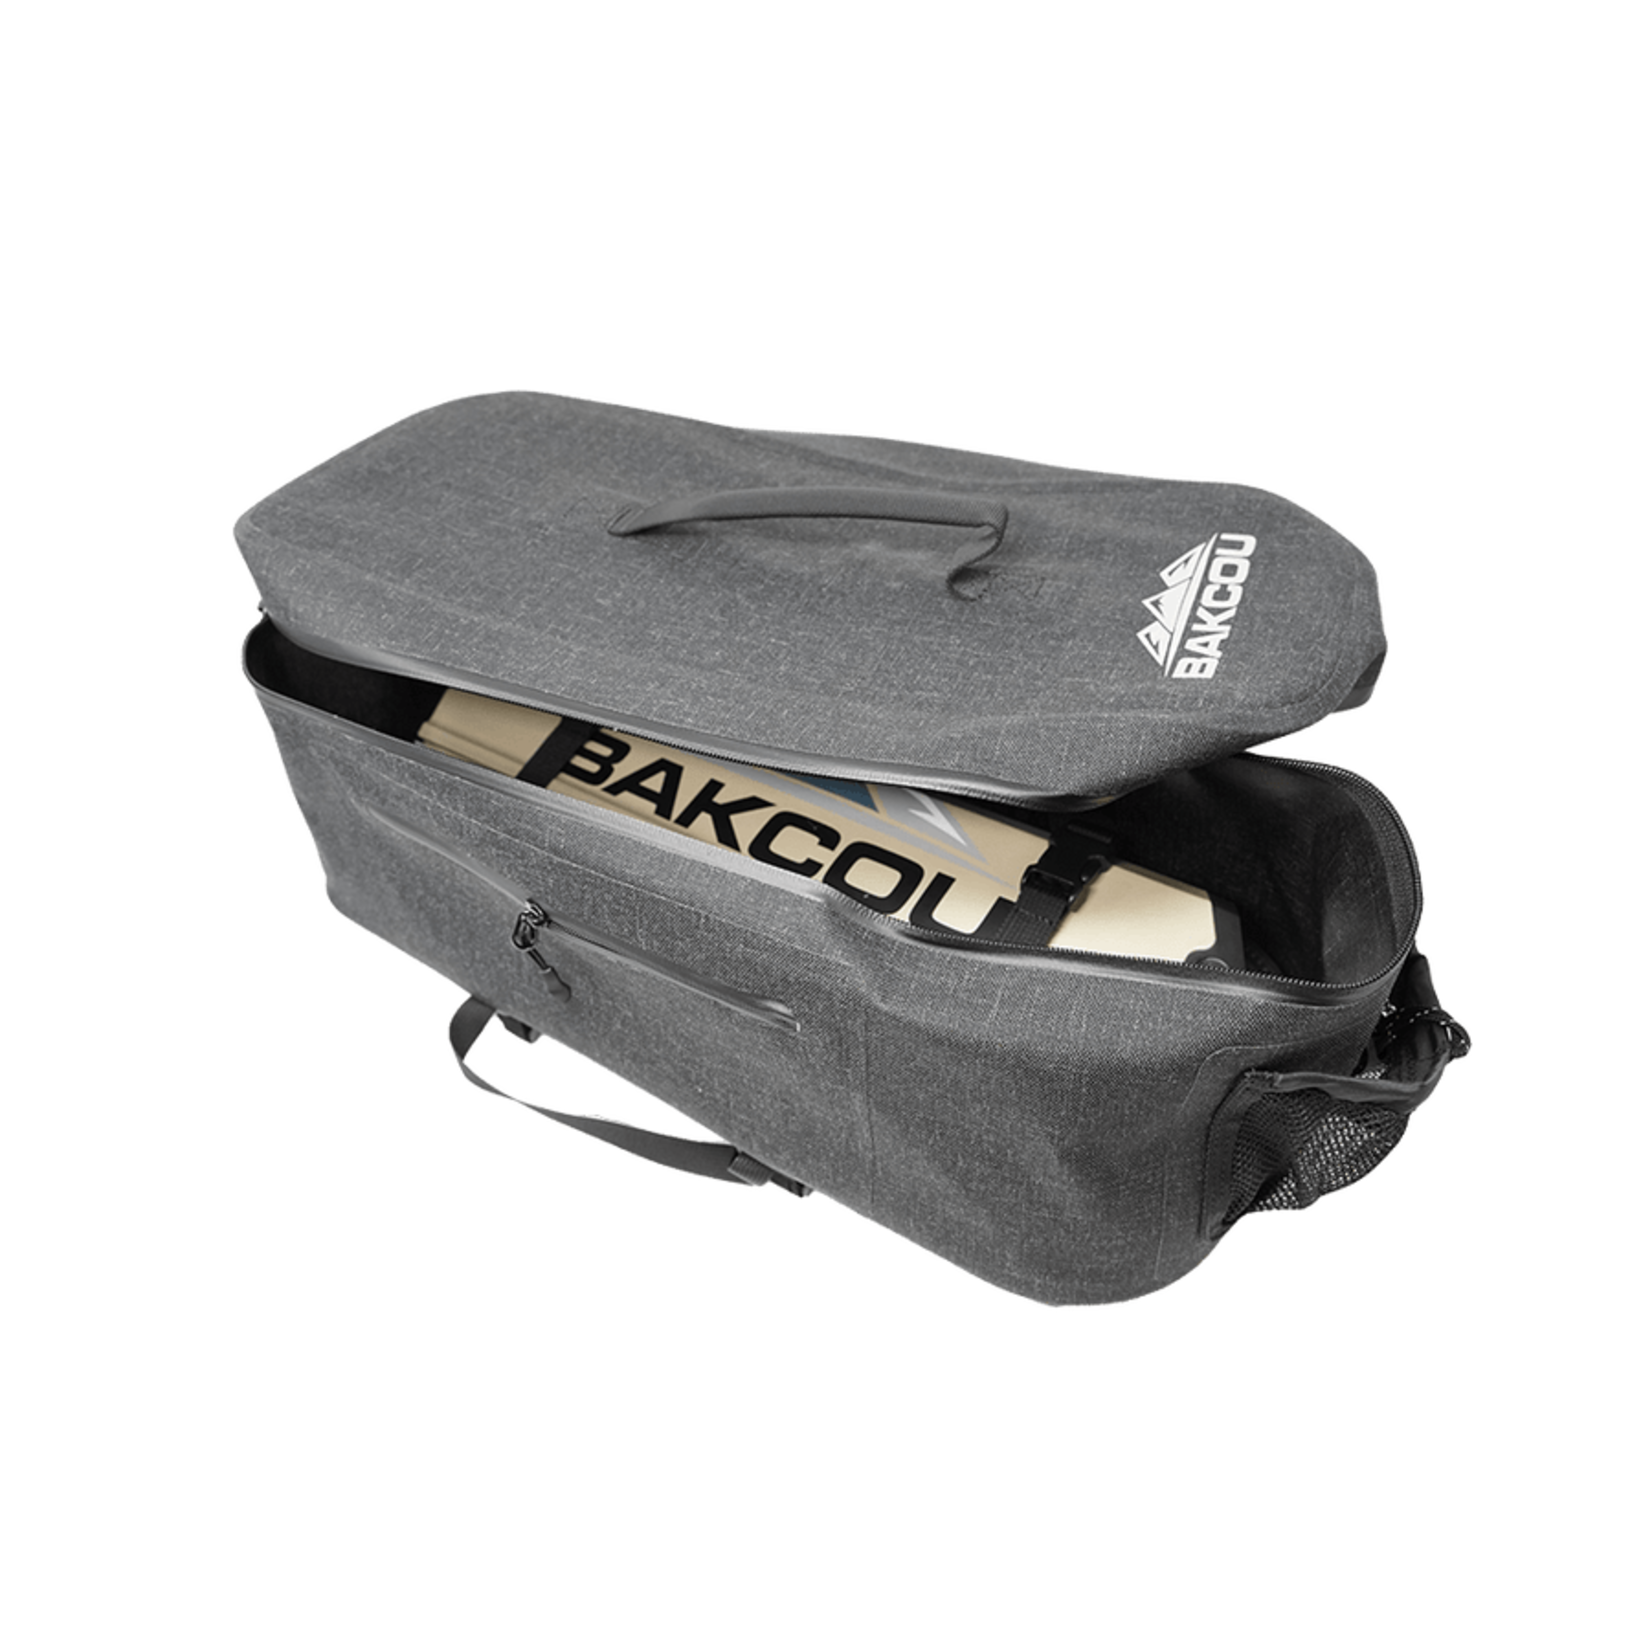 Bakcou Bakcou Top Pannier Bag Large